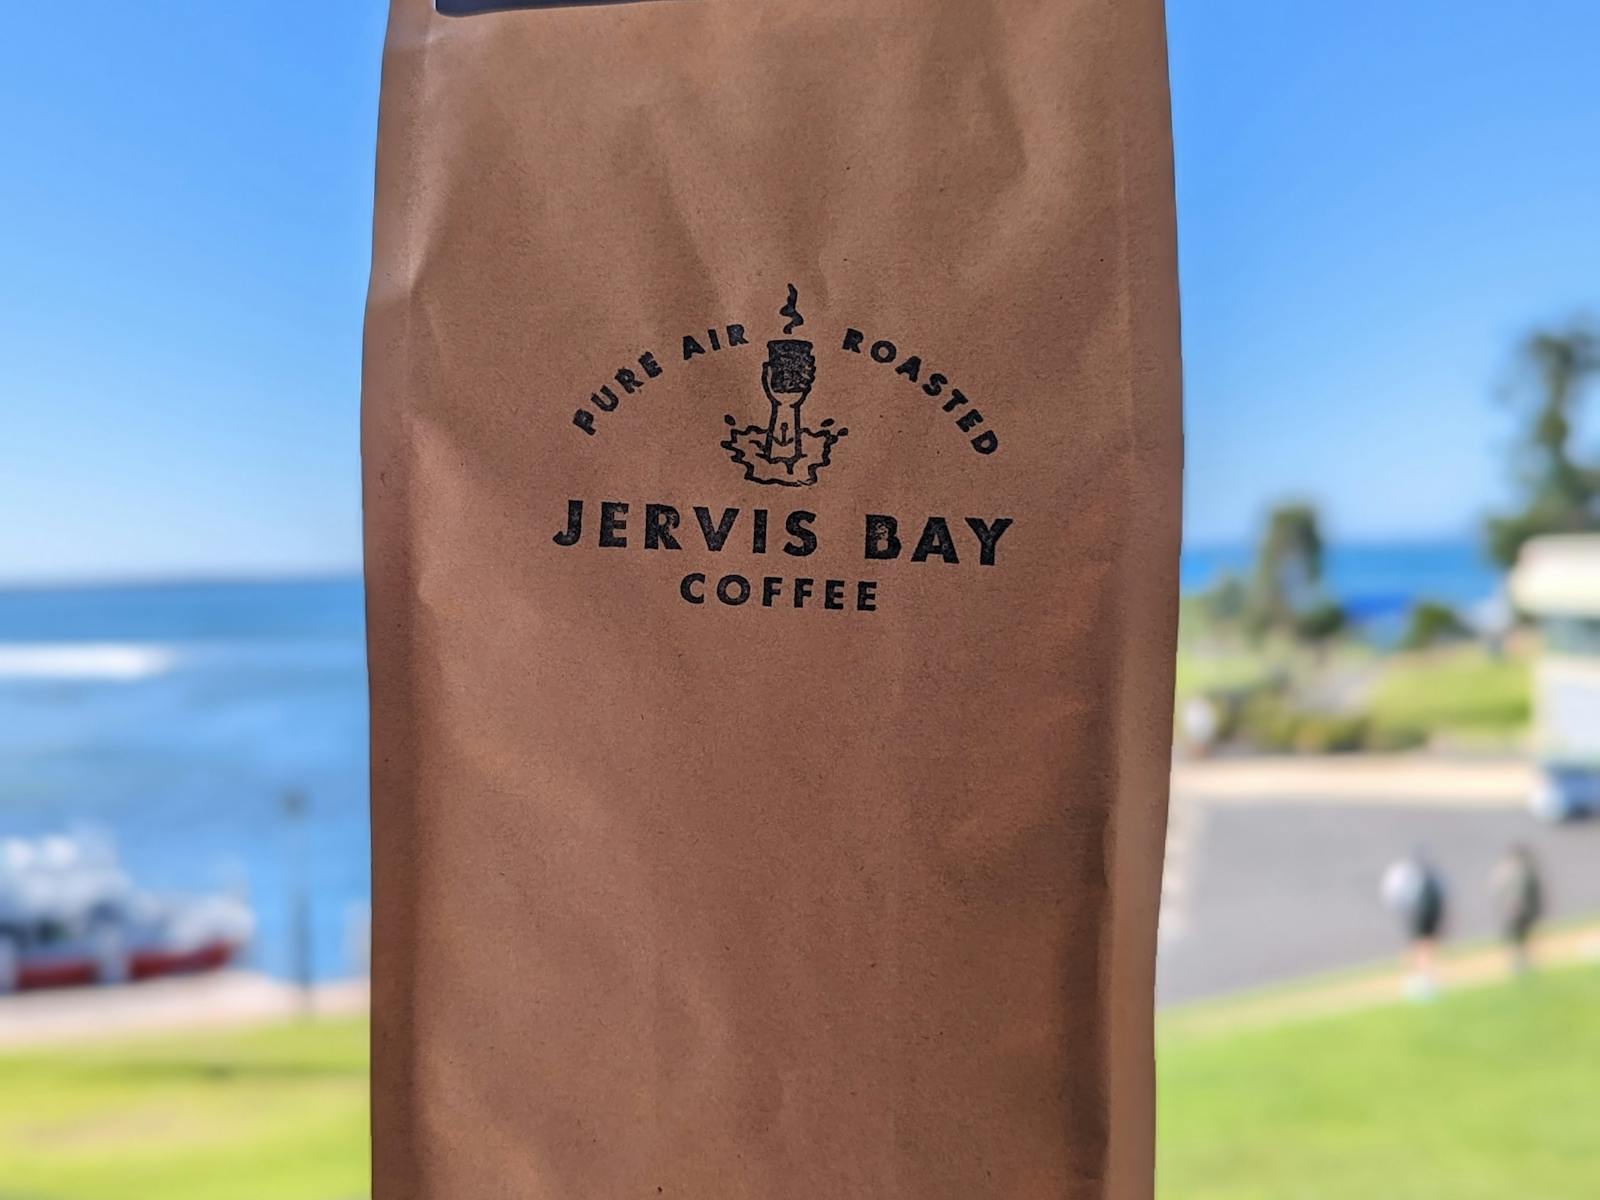 Take home a bag of Fresh Roasted Coffee